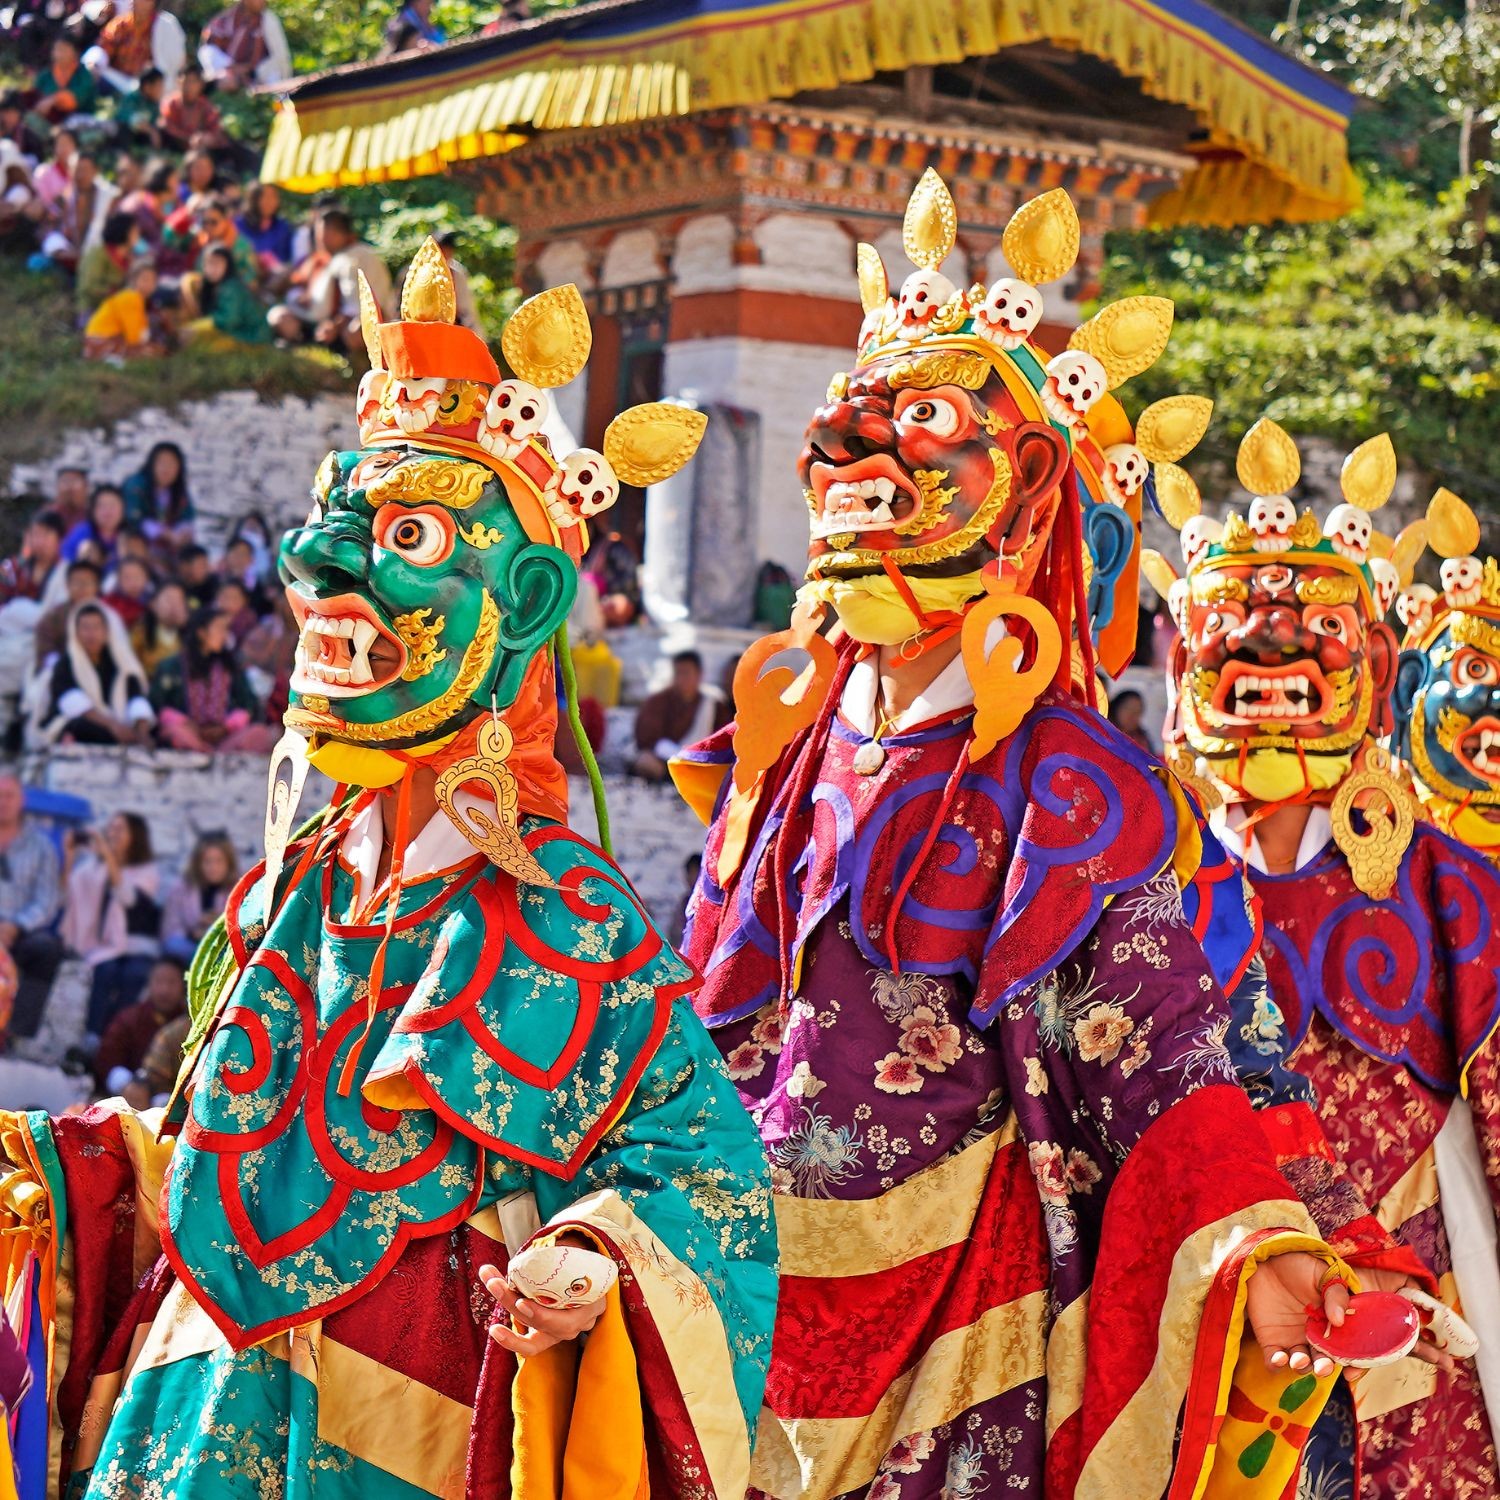 New Bhutan itineraries - coming soon!